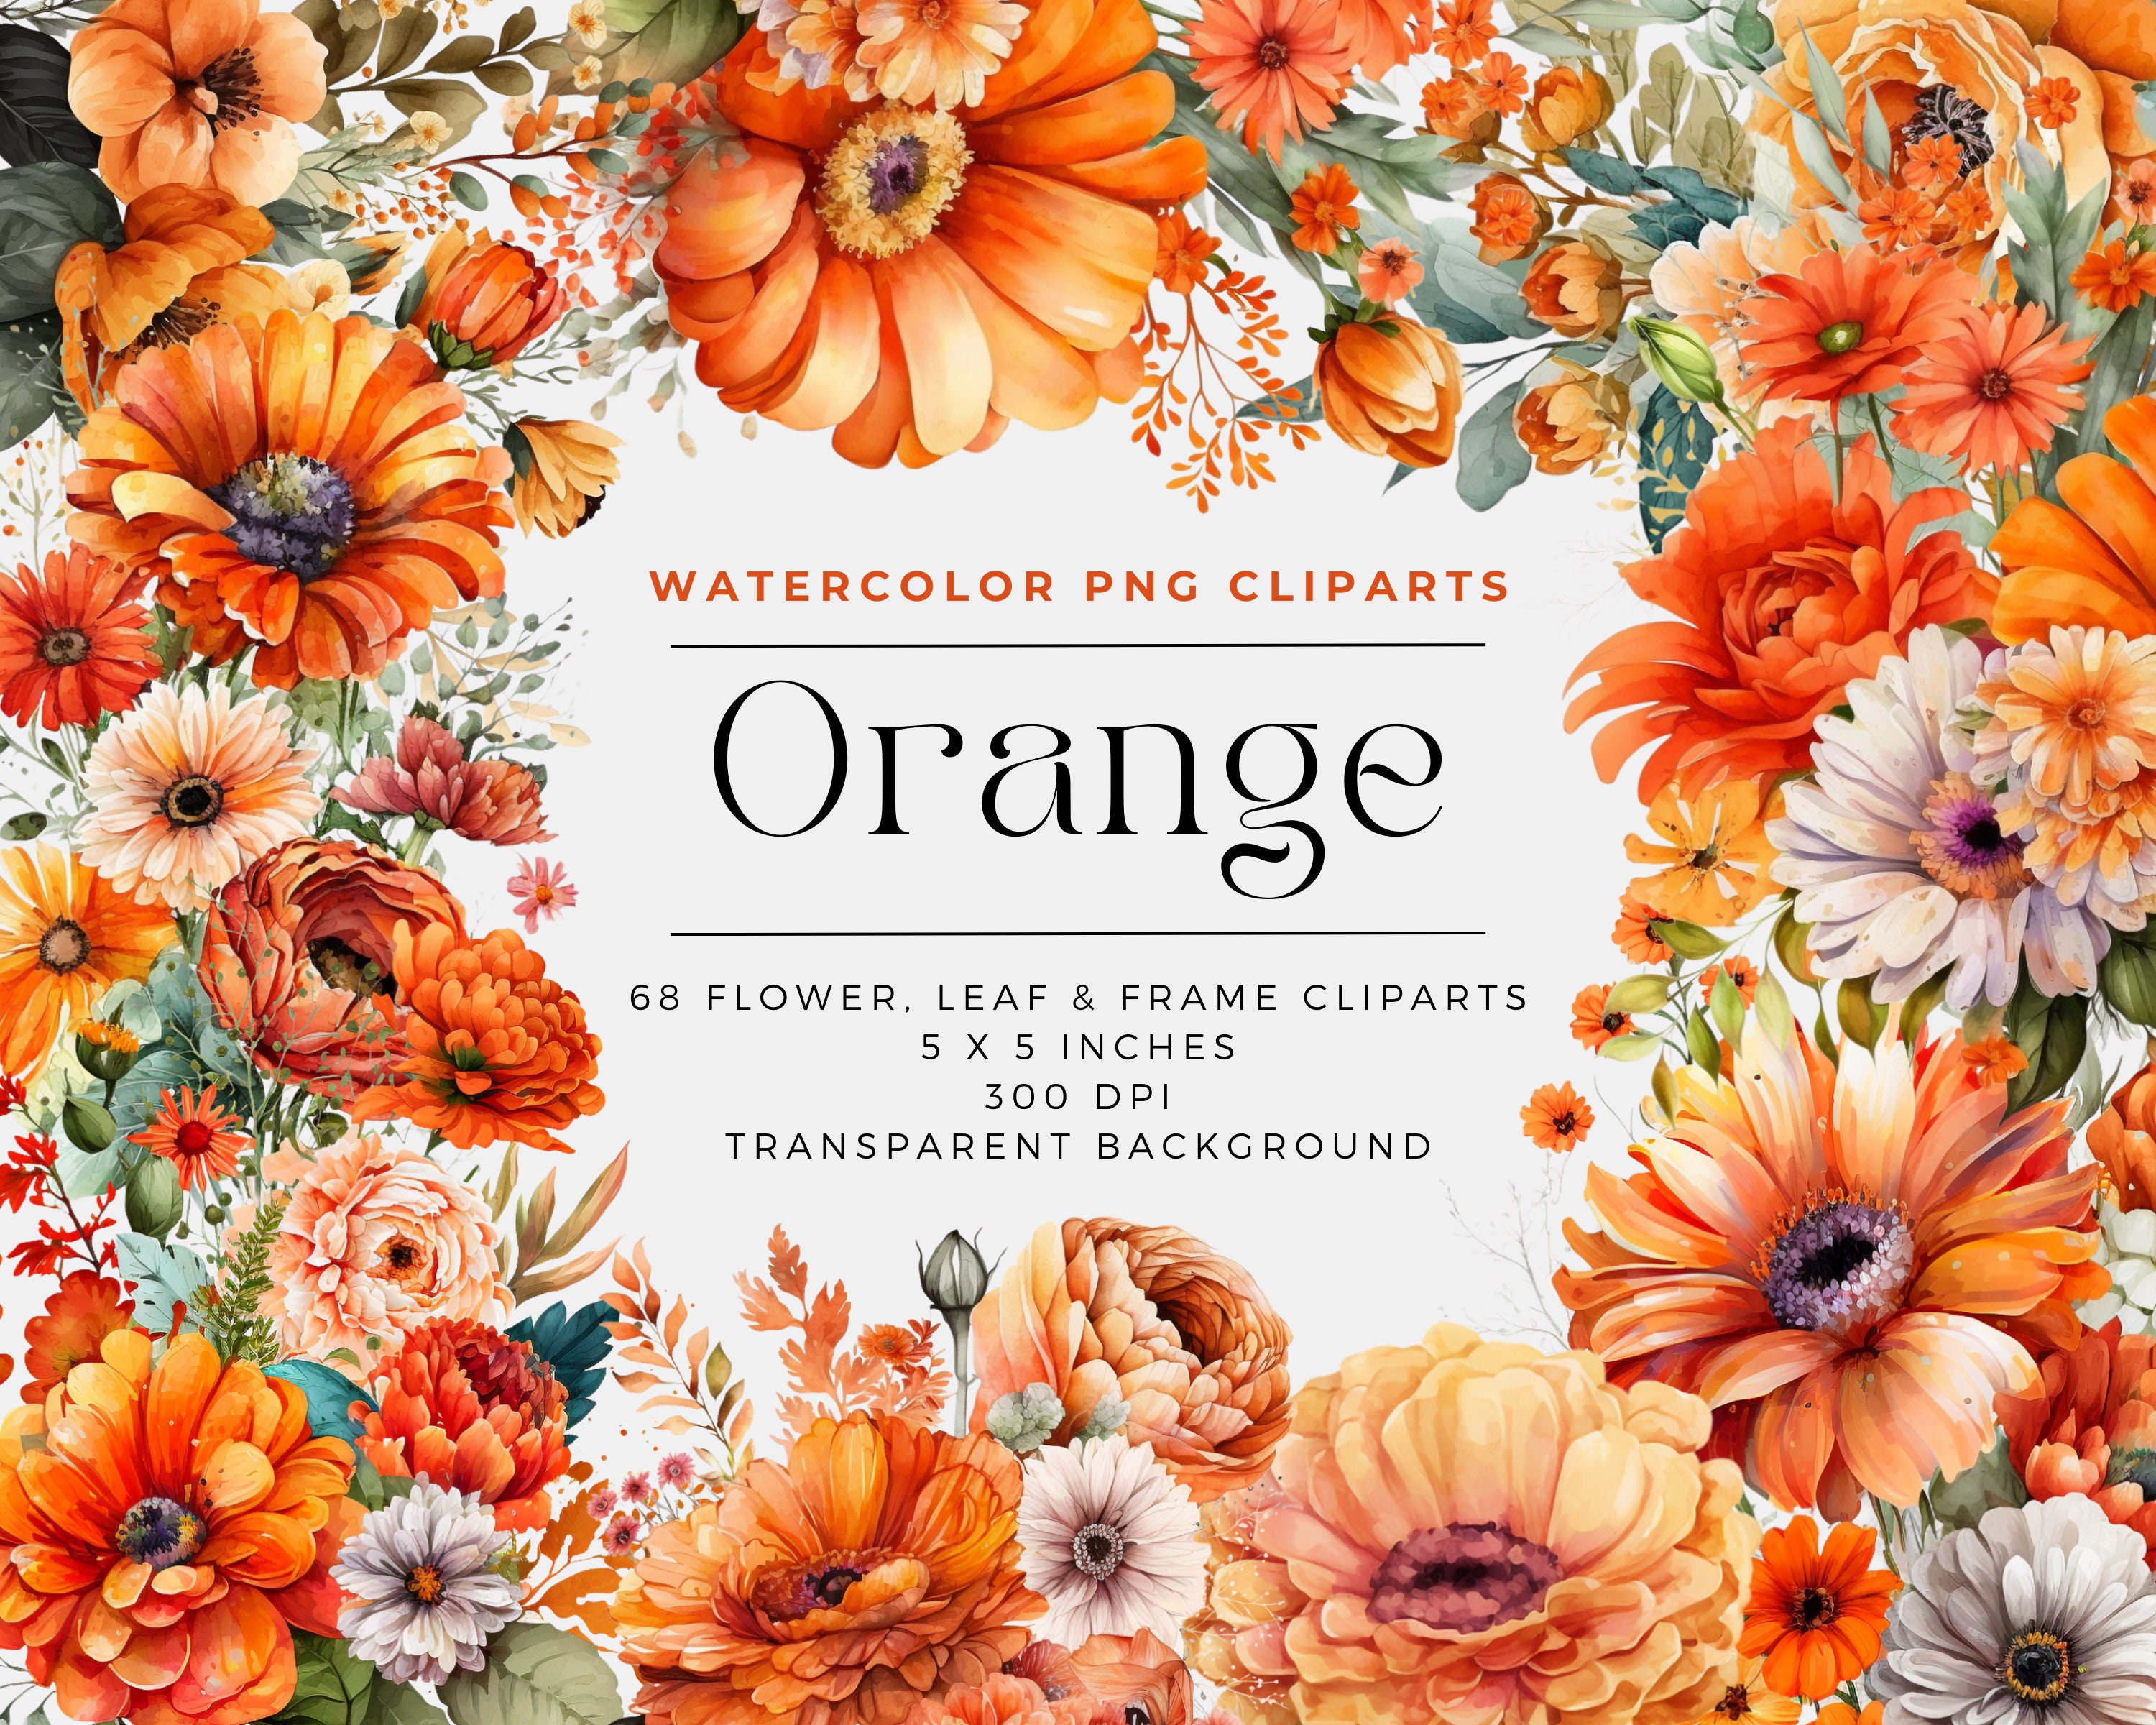 68 Orange Flowers PNG, Watercolor Floral Clipart Bouquets, Elements,  Commercial Use, Digital Clipart PNG 